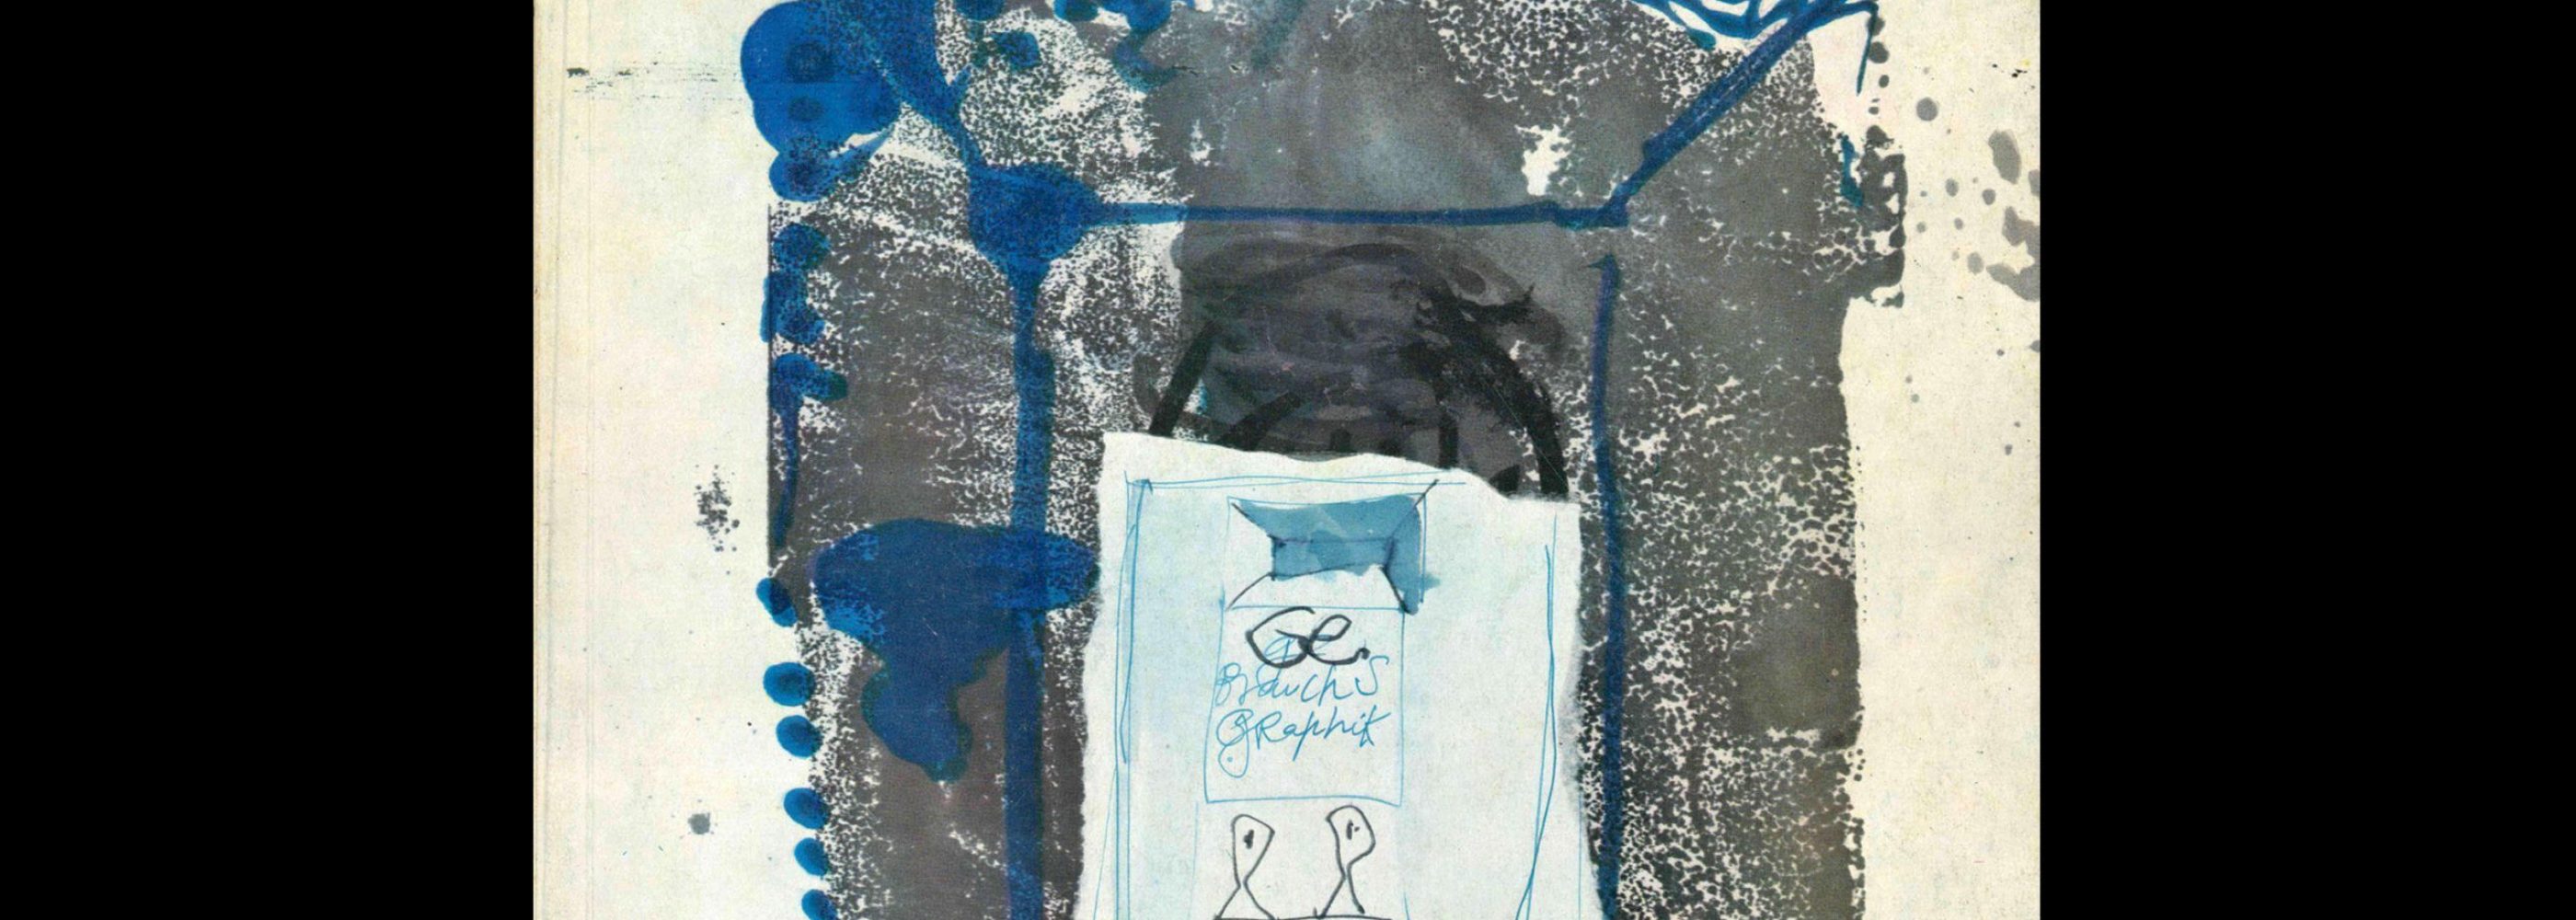 Gebrauchsgraphik, 6, 1966. Cover design by Antoni Clavé